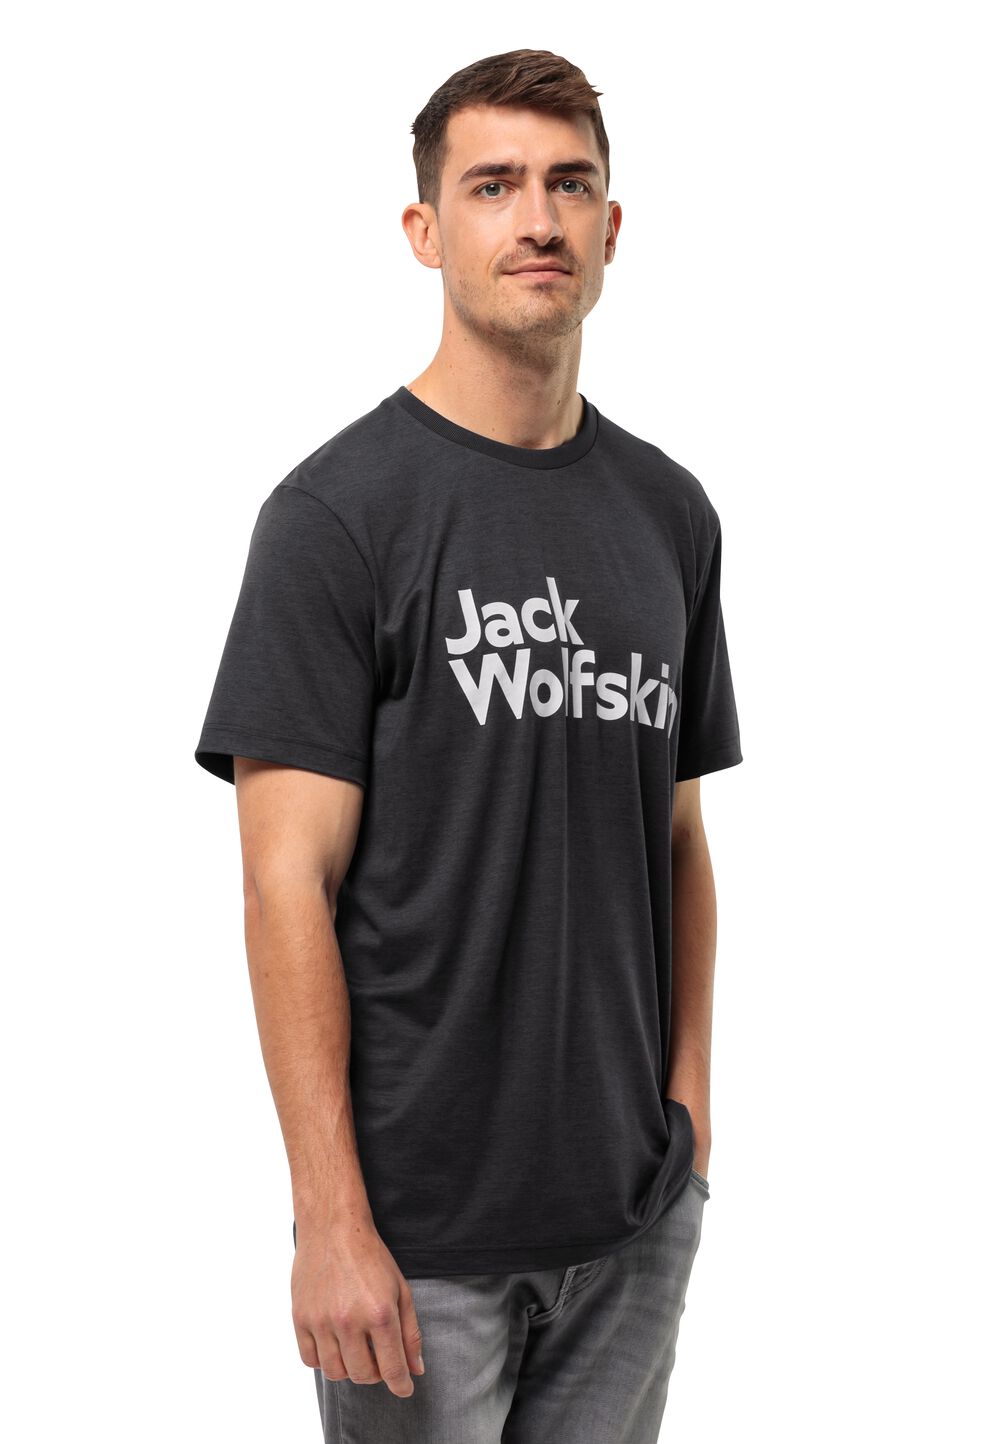 Jack Wolfskin Brand T-Shirt Men Functioneel shirt Heren 3XL zwart black